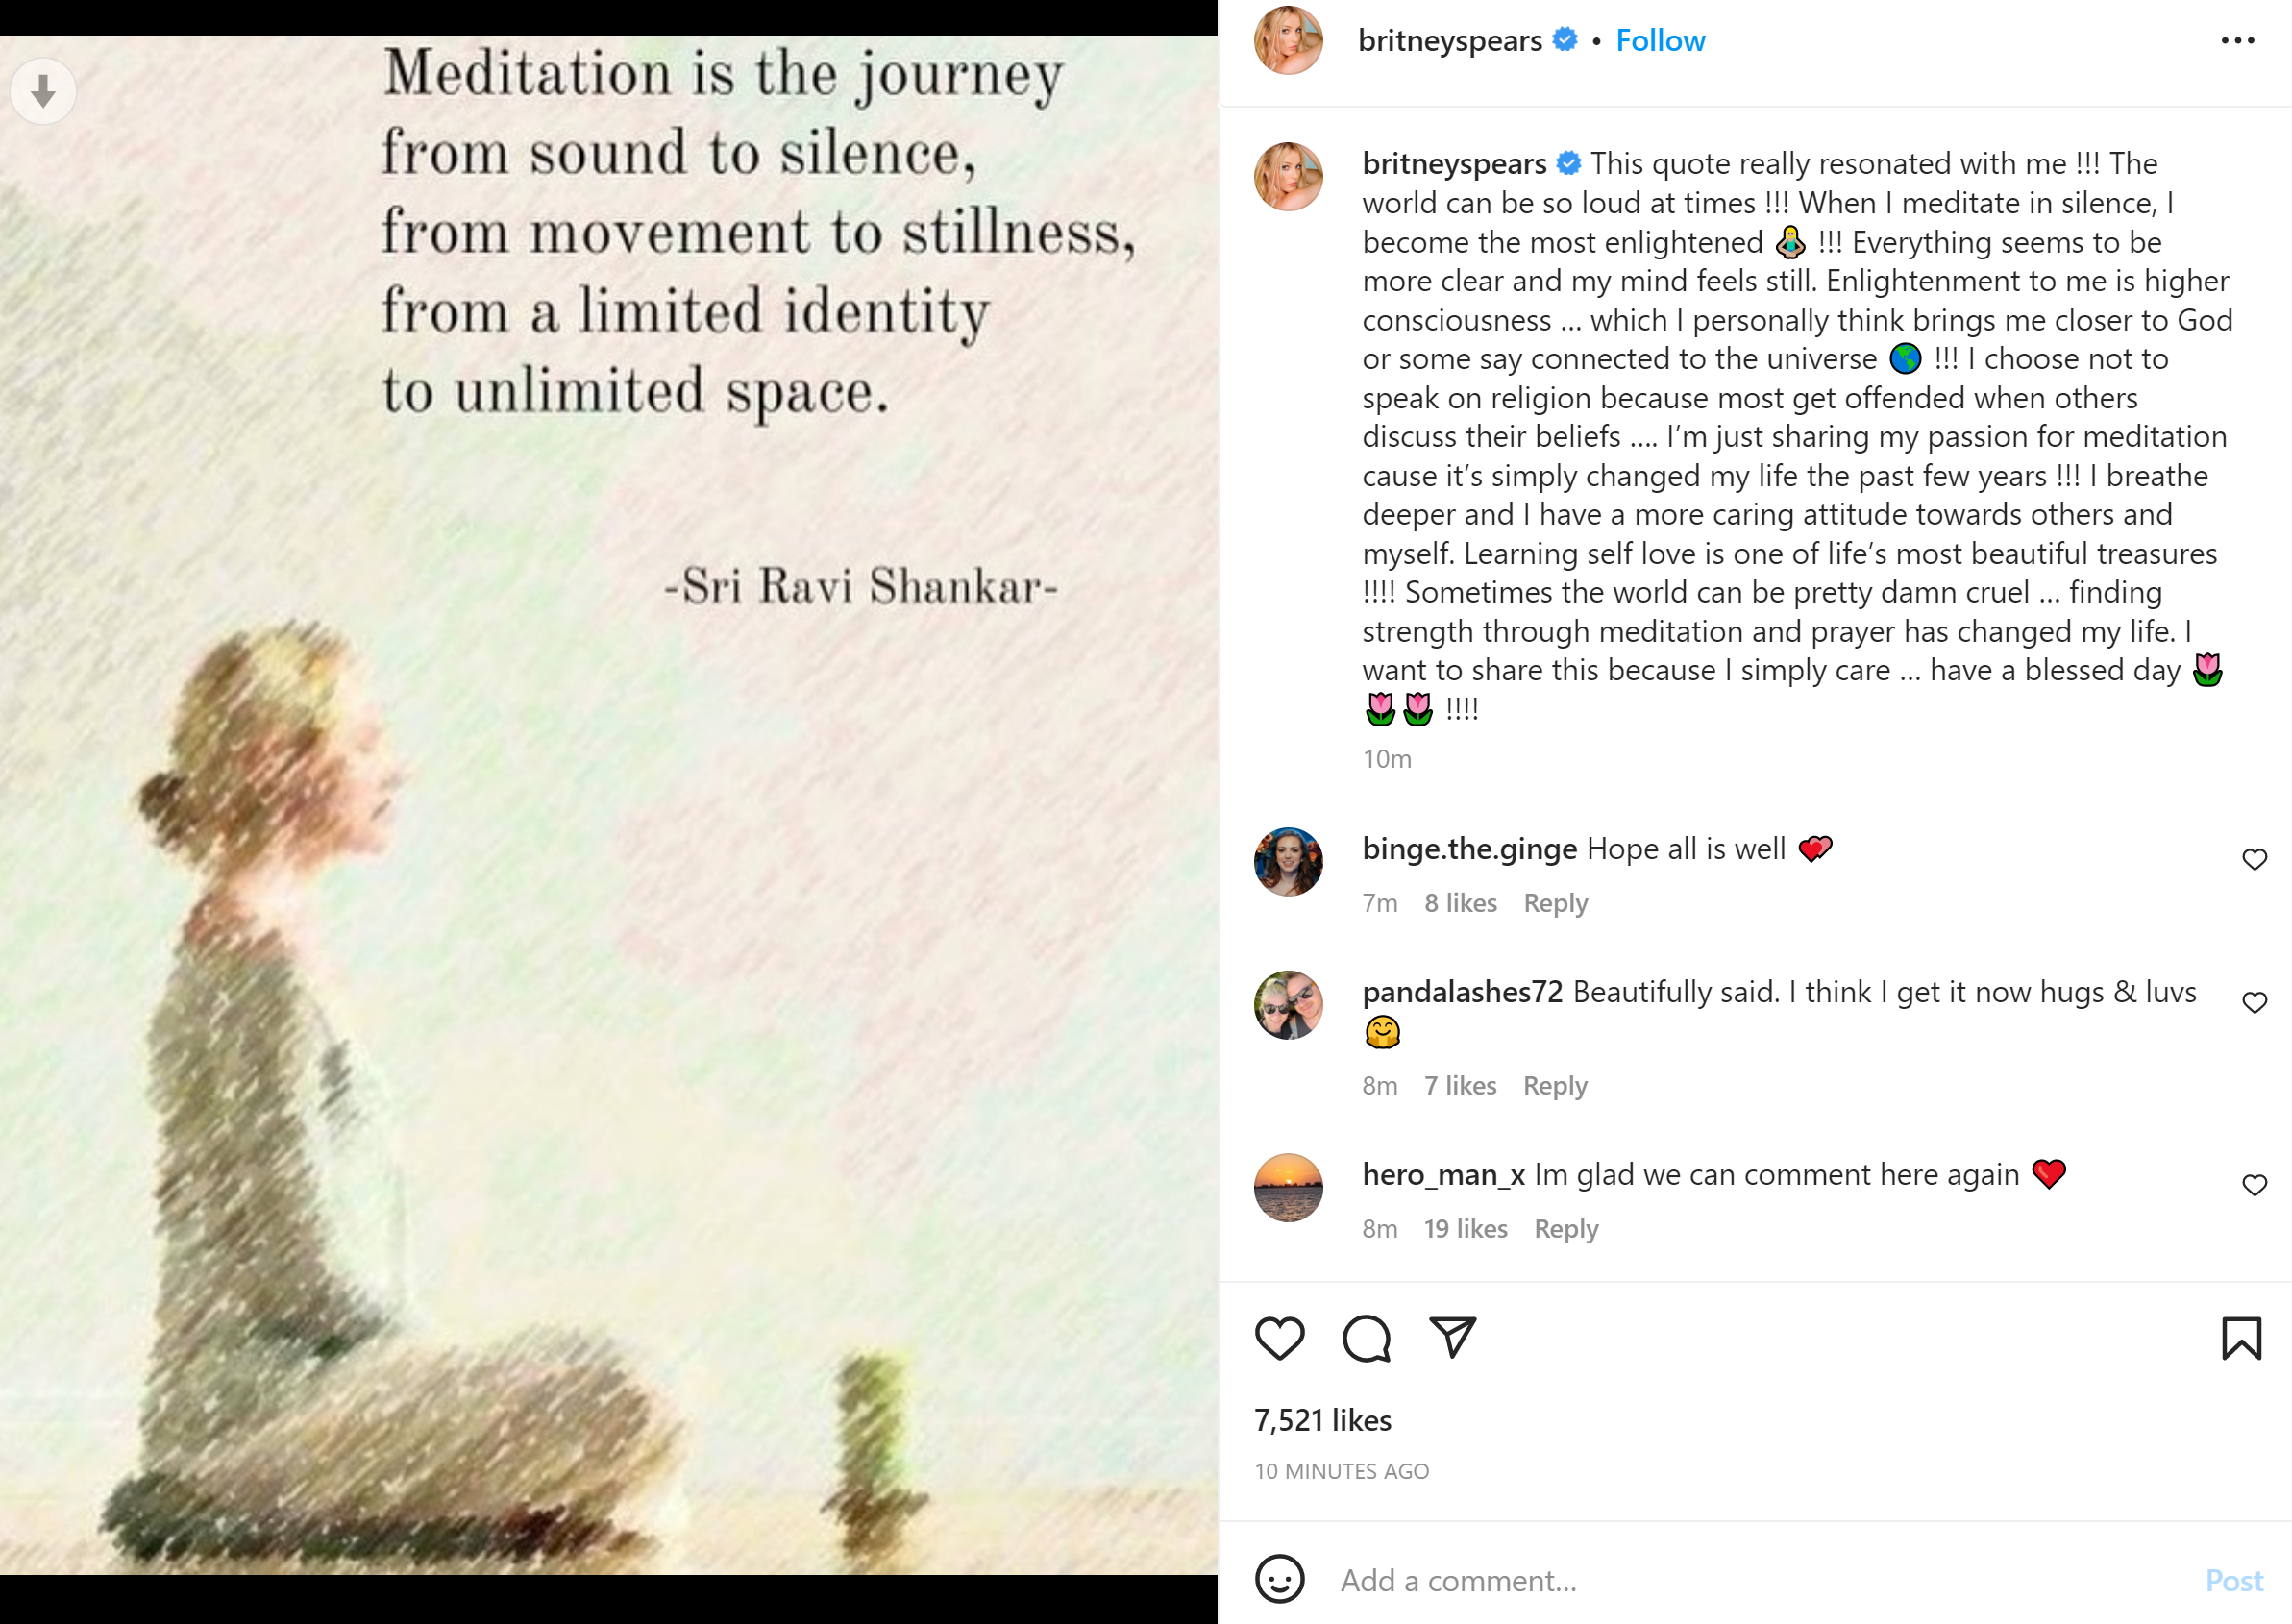 Britney Spears March 7 Meditation Instagram Post